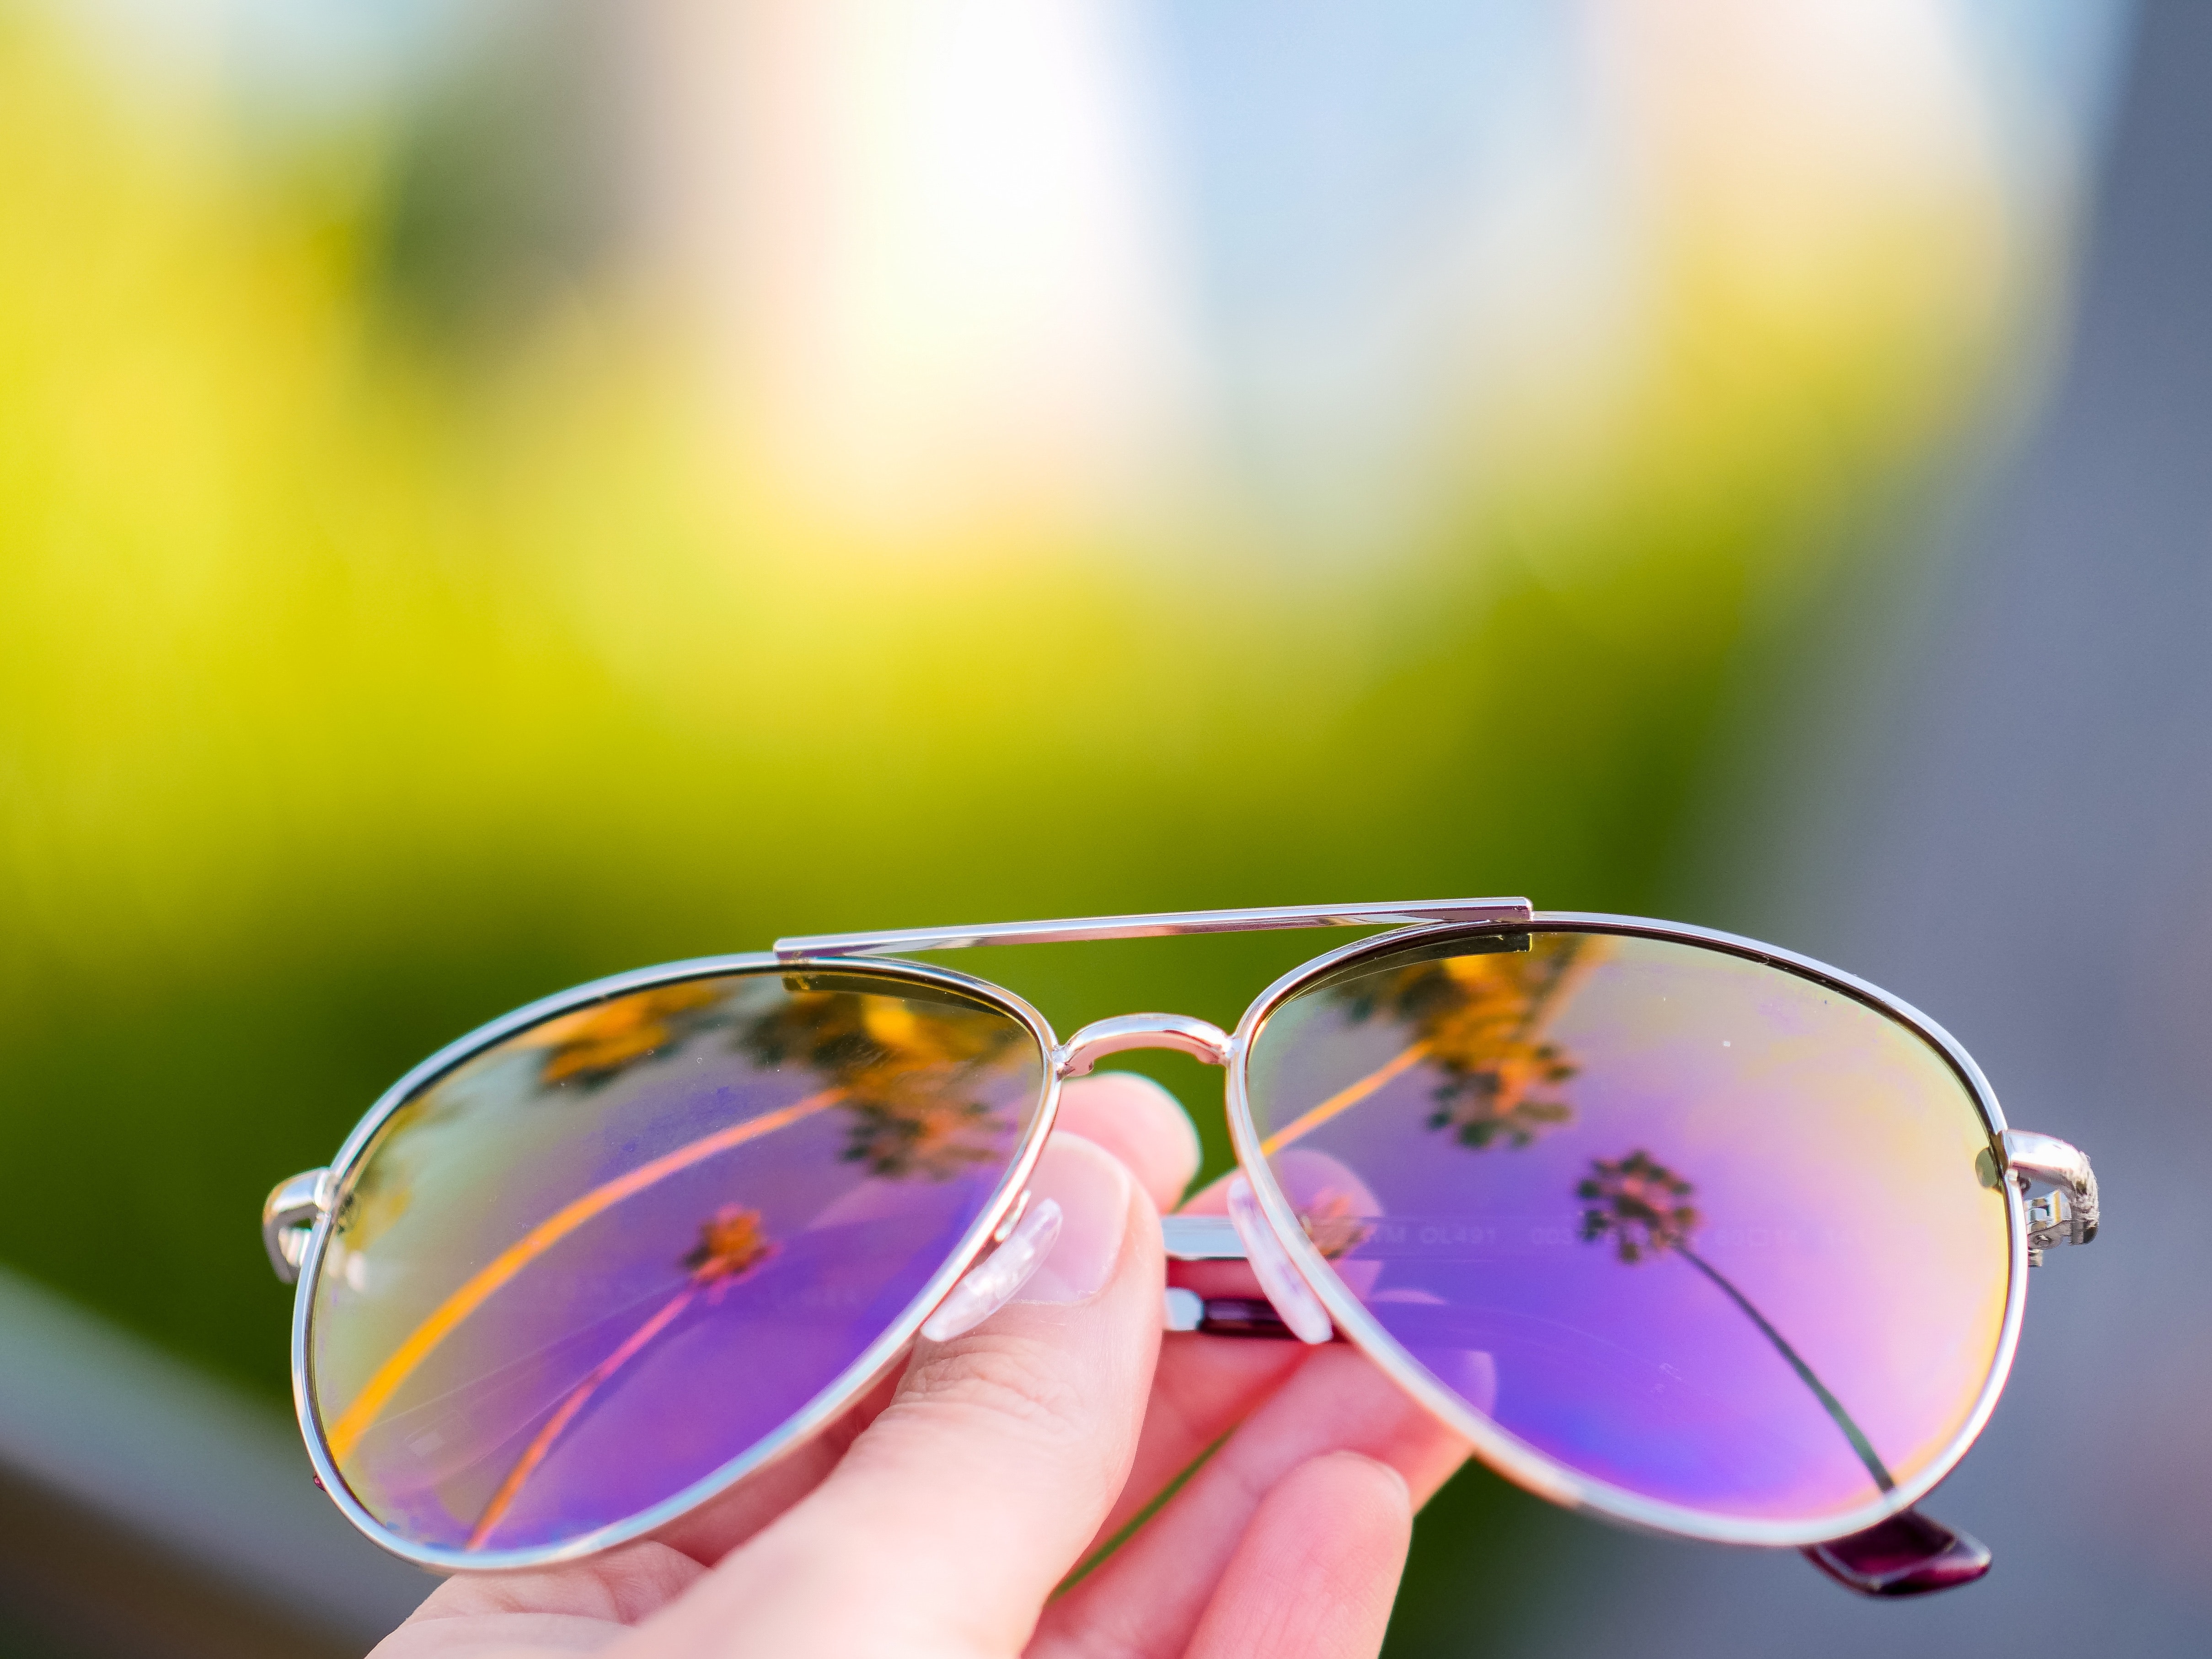 Buy Polarized Aviator Sunglasses for Small Face Women Men, 100% UV400  Protection, 52MM (Black/Black Lens) at Amazon.in